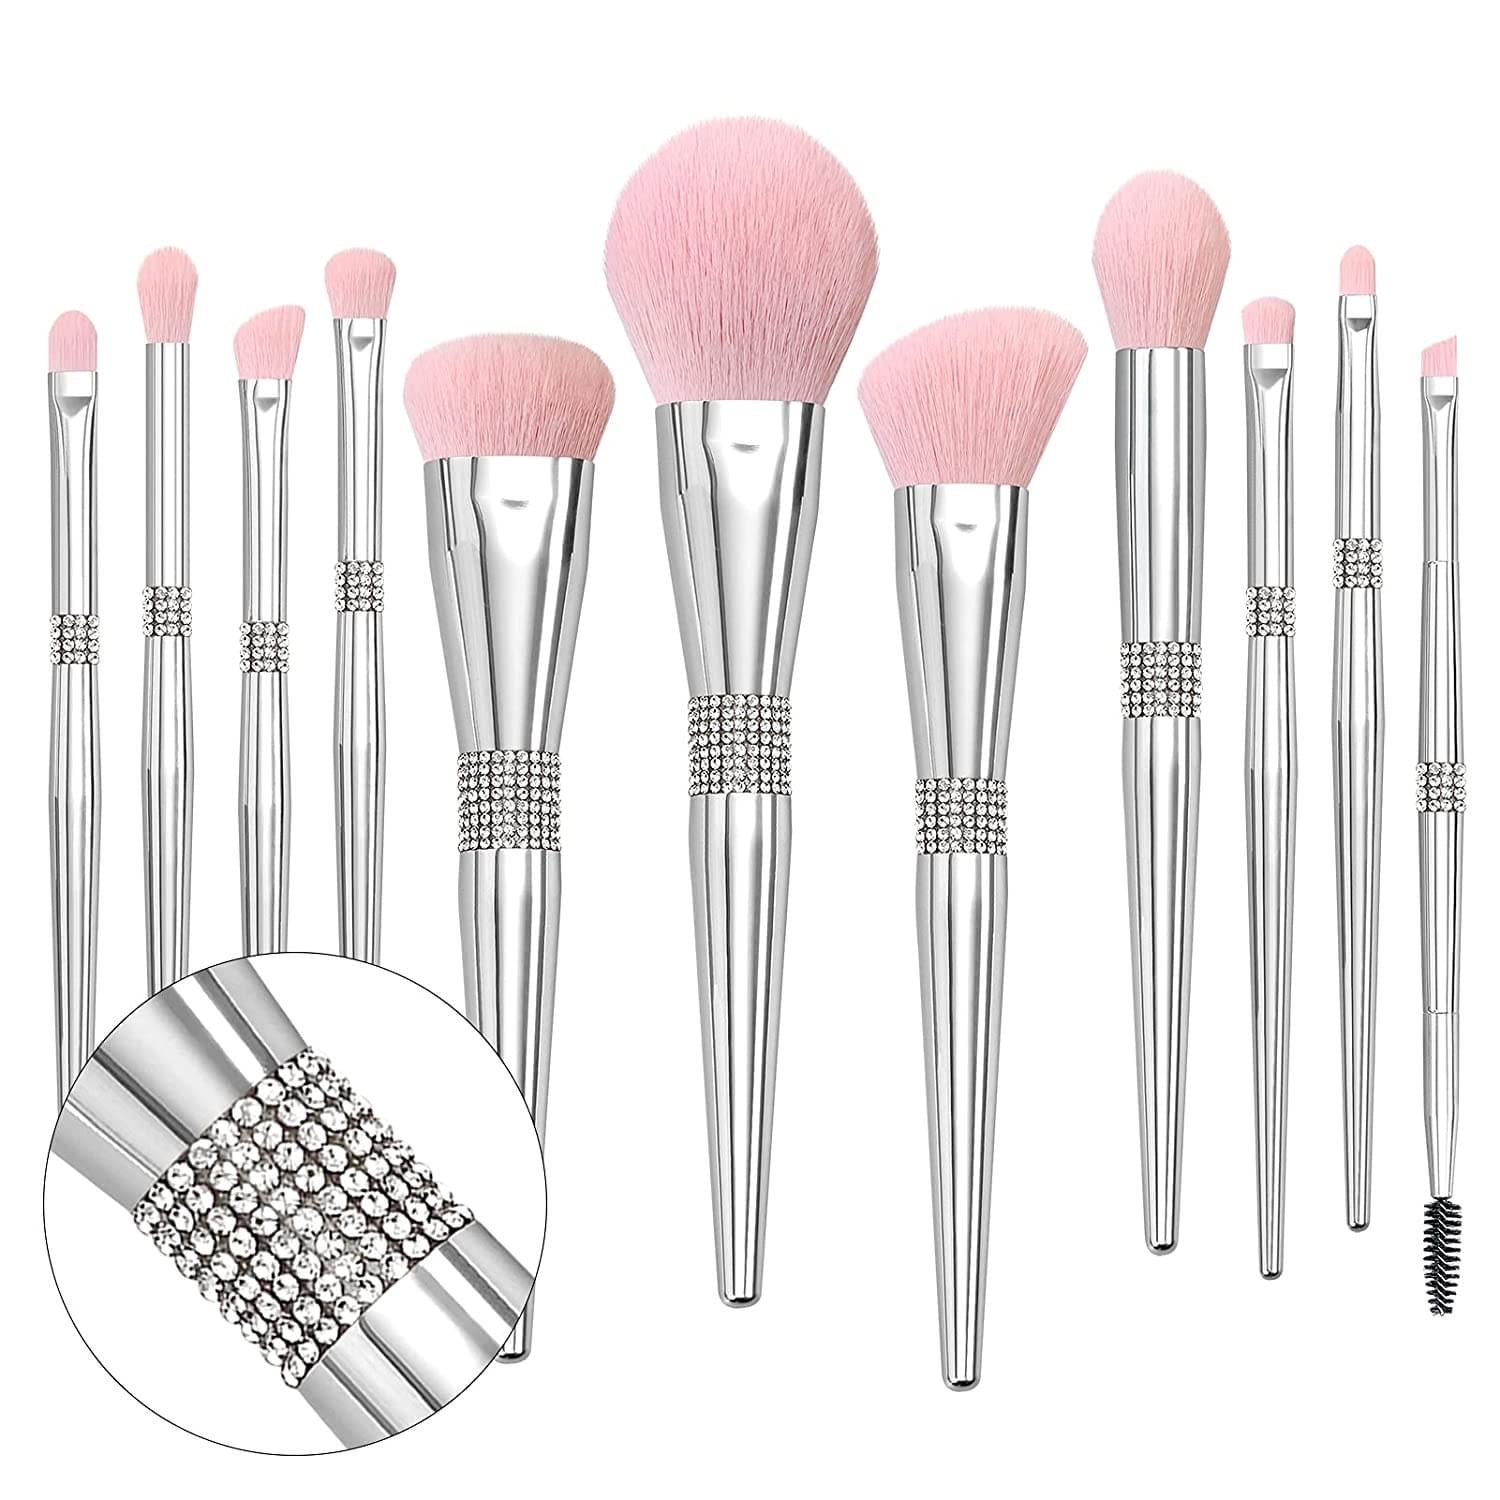 The Elite Brush Set Wink4me Cosmetics